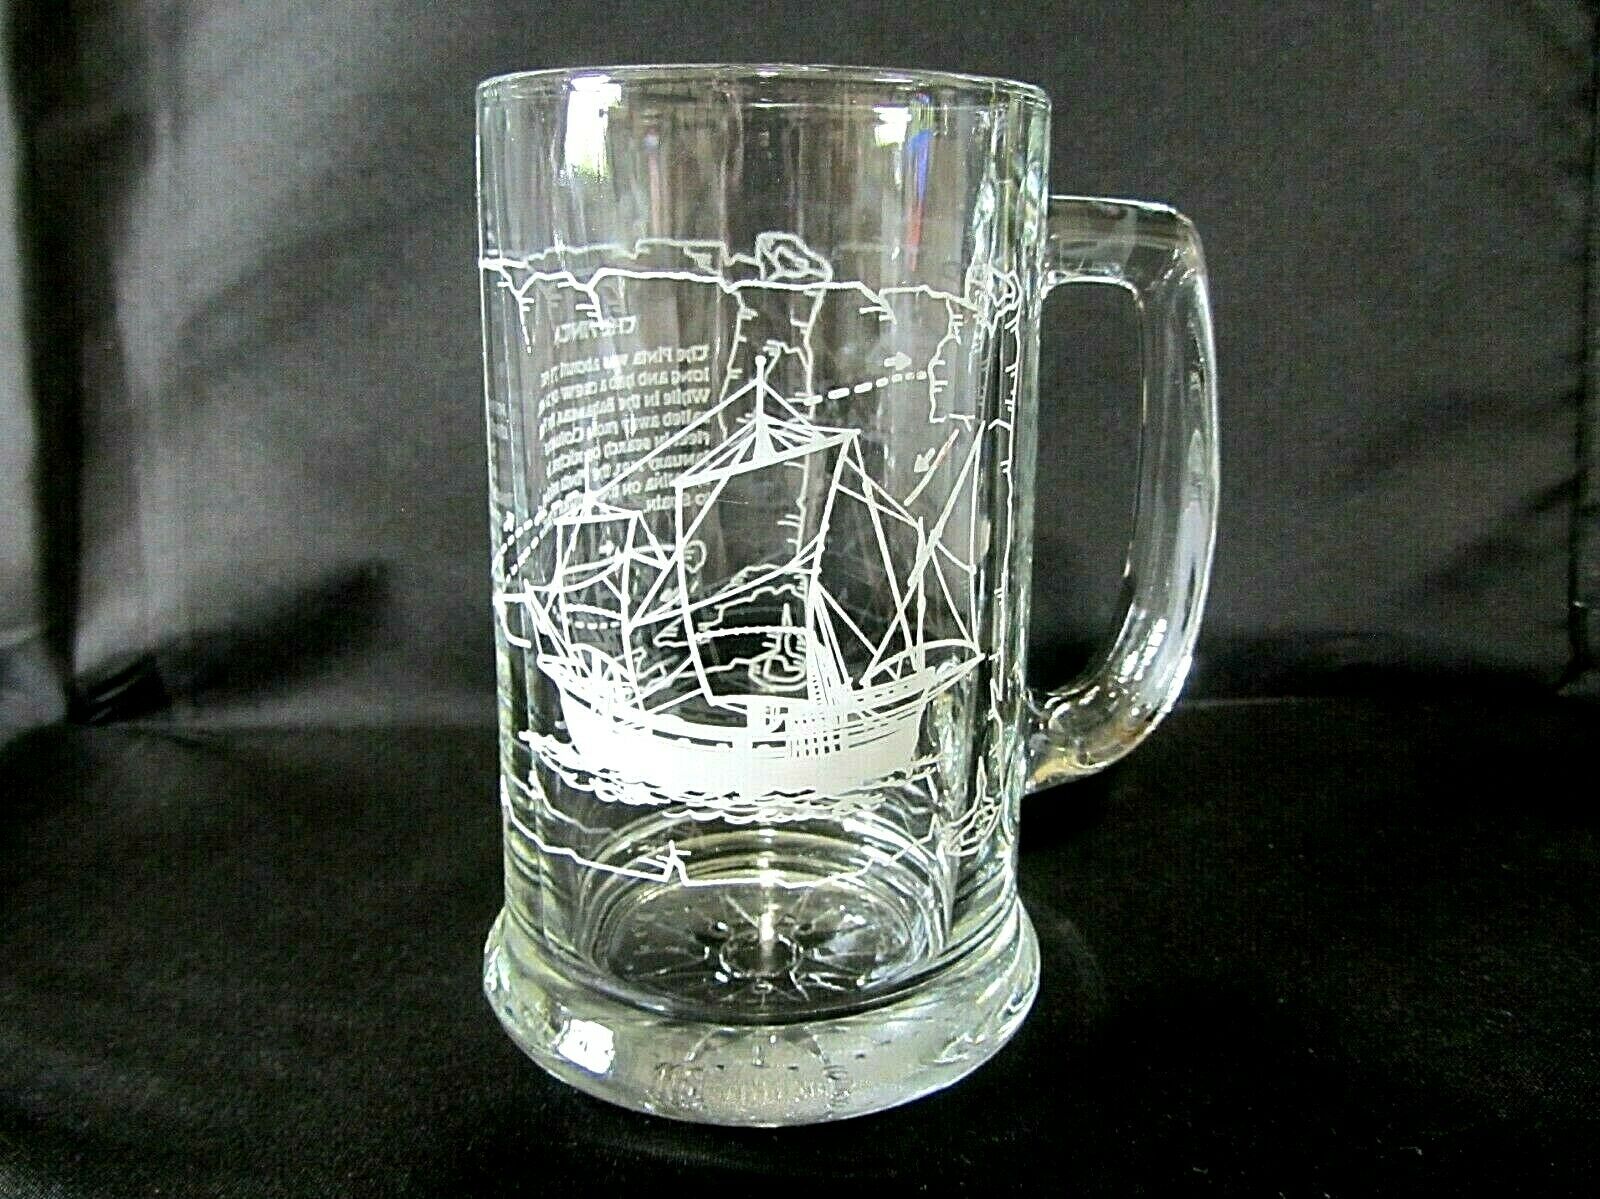 Fenton Glass Crystal Beer Mug, "the Pinta", Ship, Nautical For Miller Brewing Co